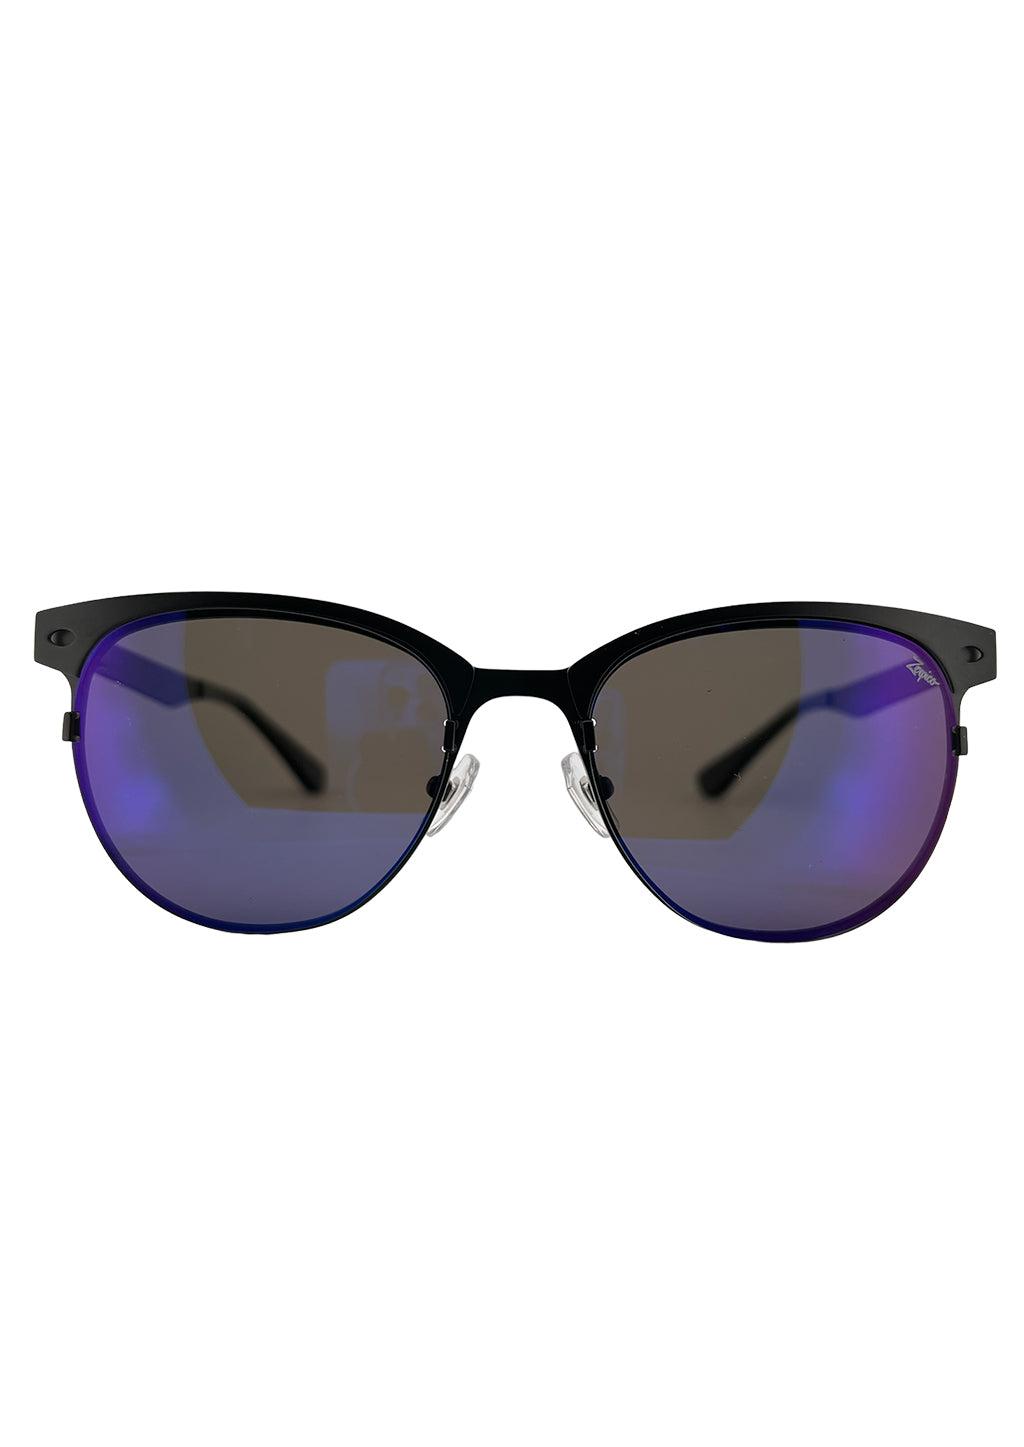 Clubmaster Sunglasses V2 - Studio photo of the front in black.